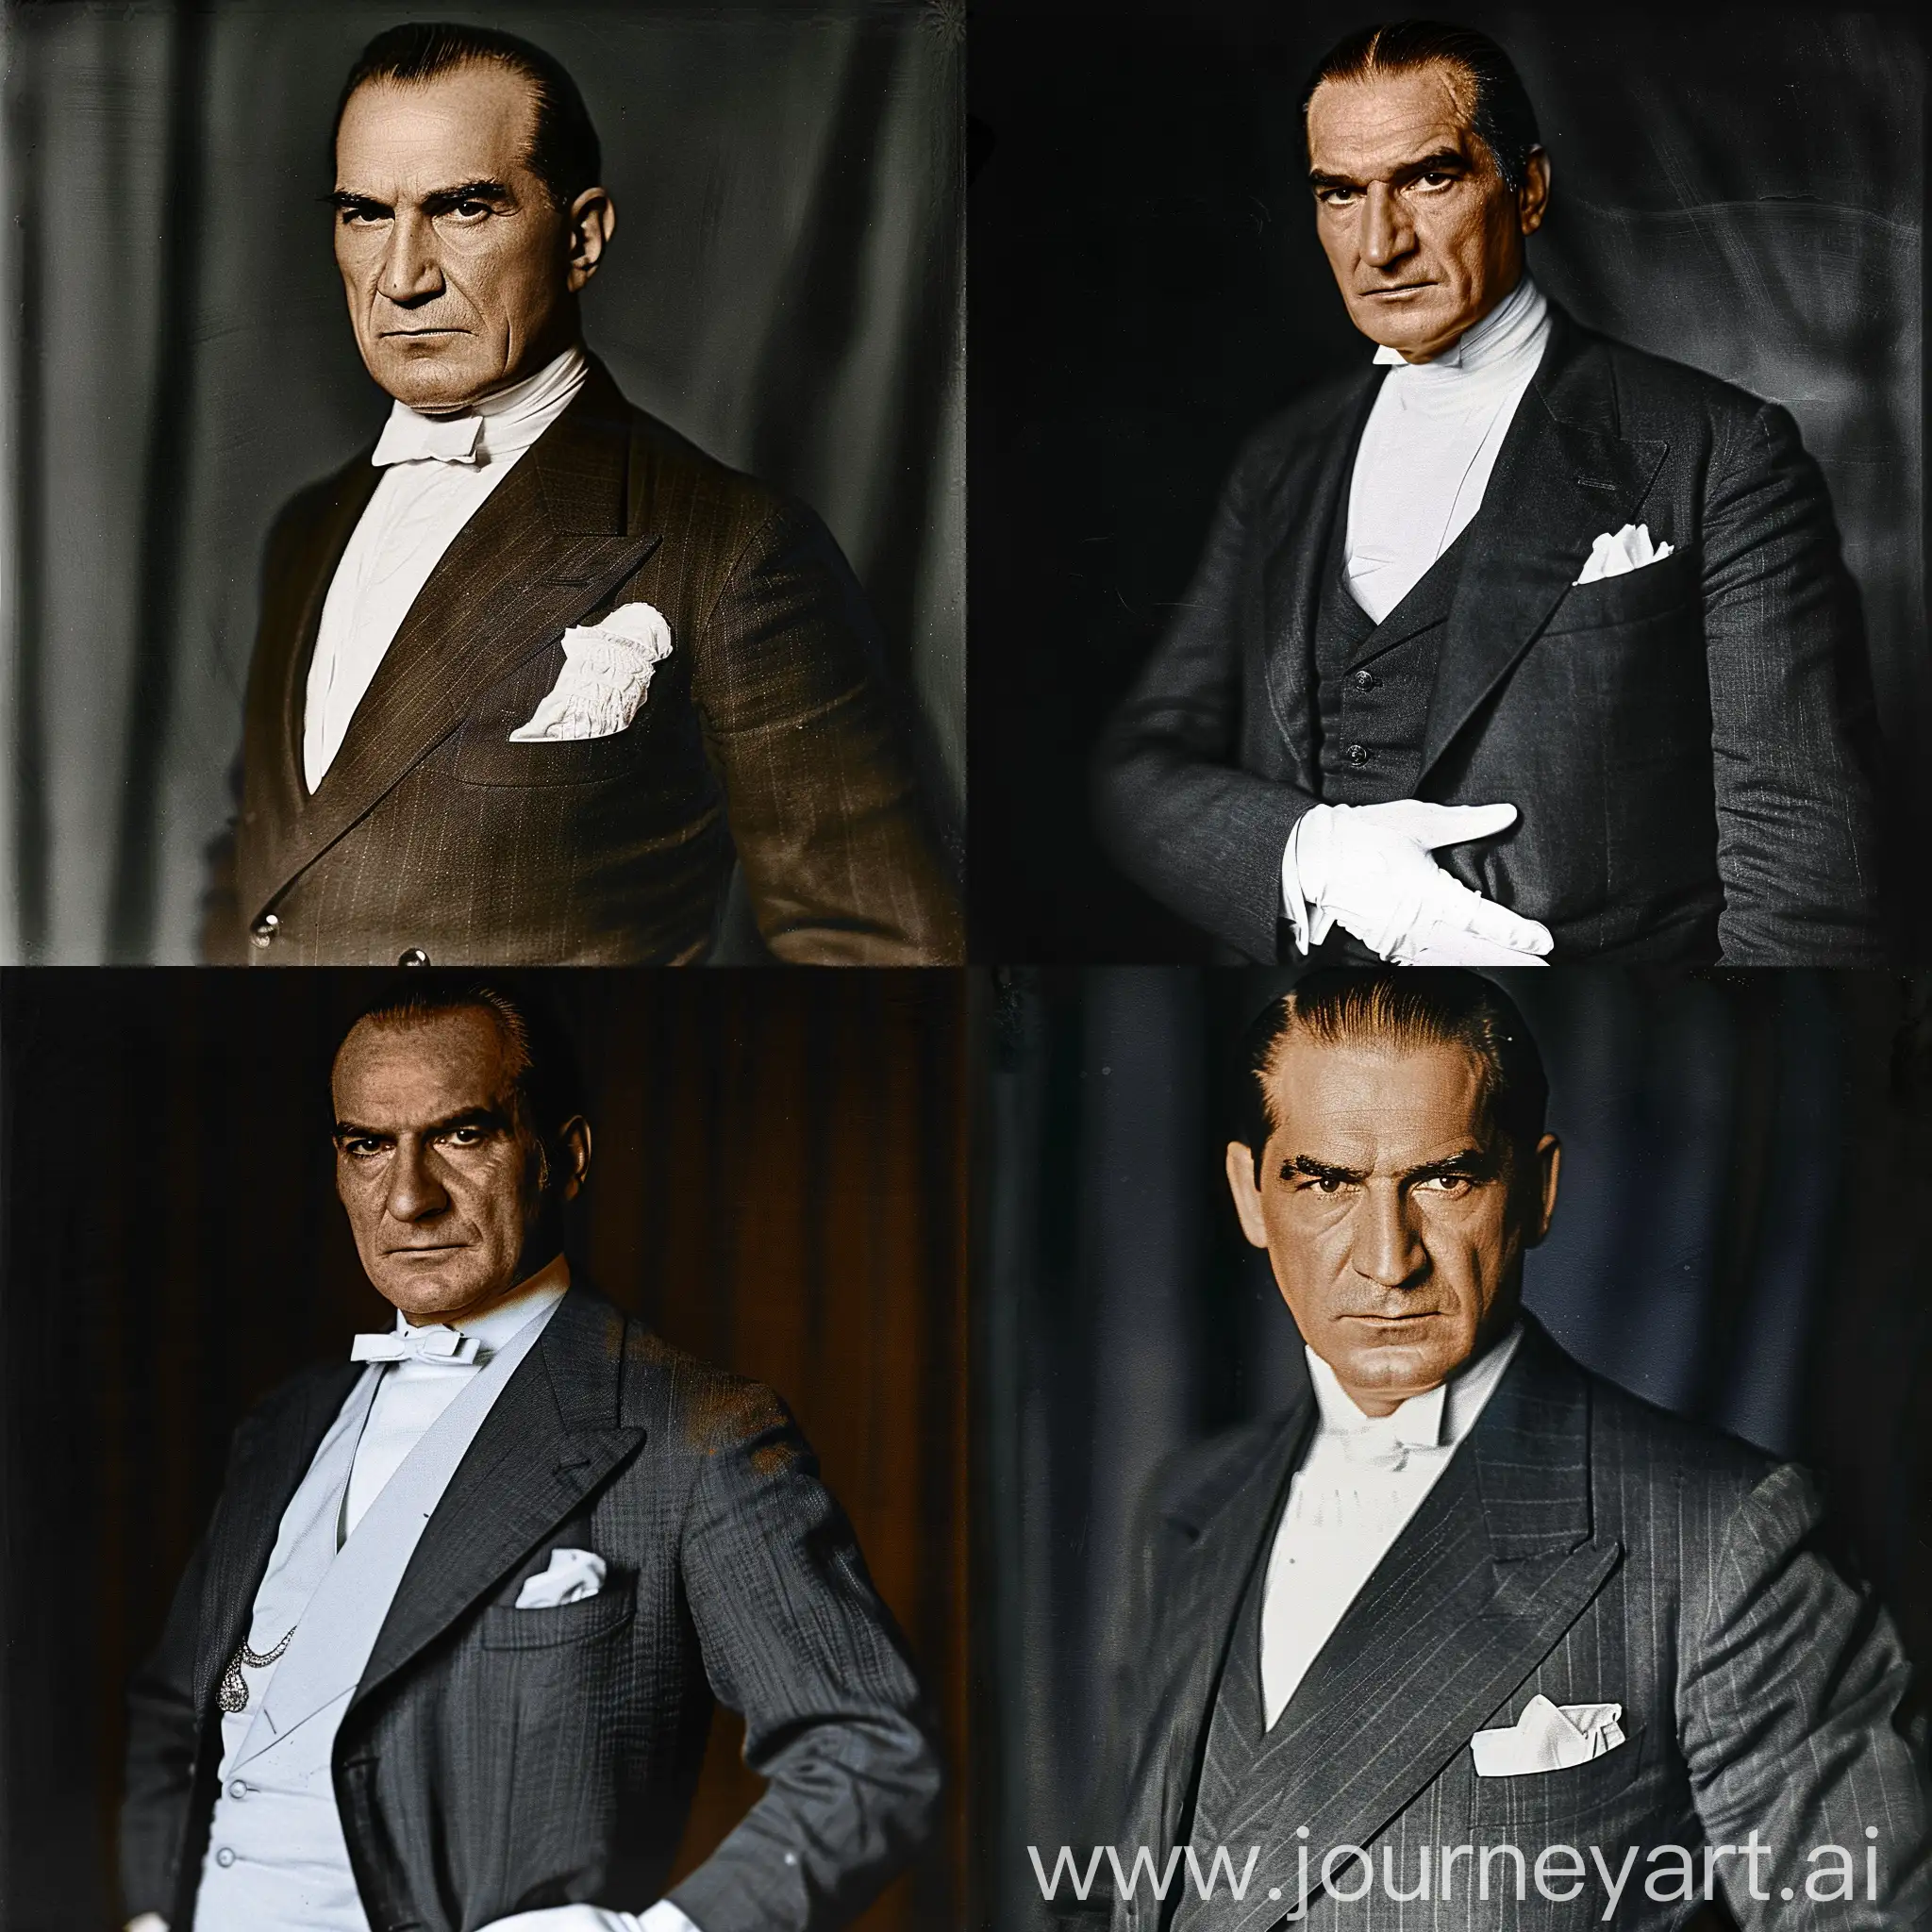 Mustafa Kemal Atatürk, depicted in fine suit, white
shirt, slicked back hair, charismatic, colorized,
cinematic lighting